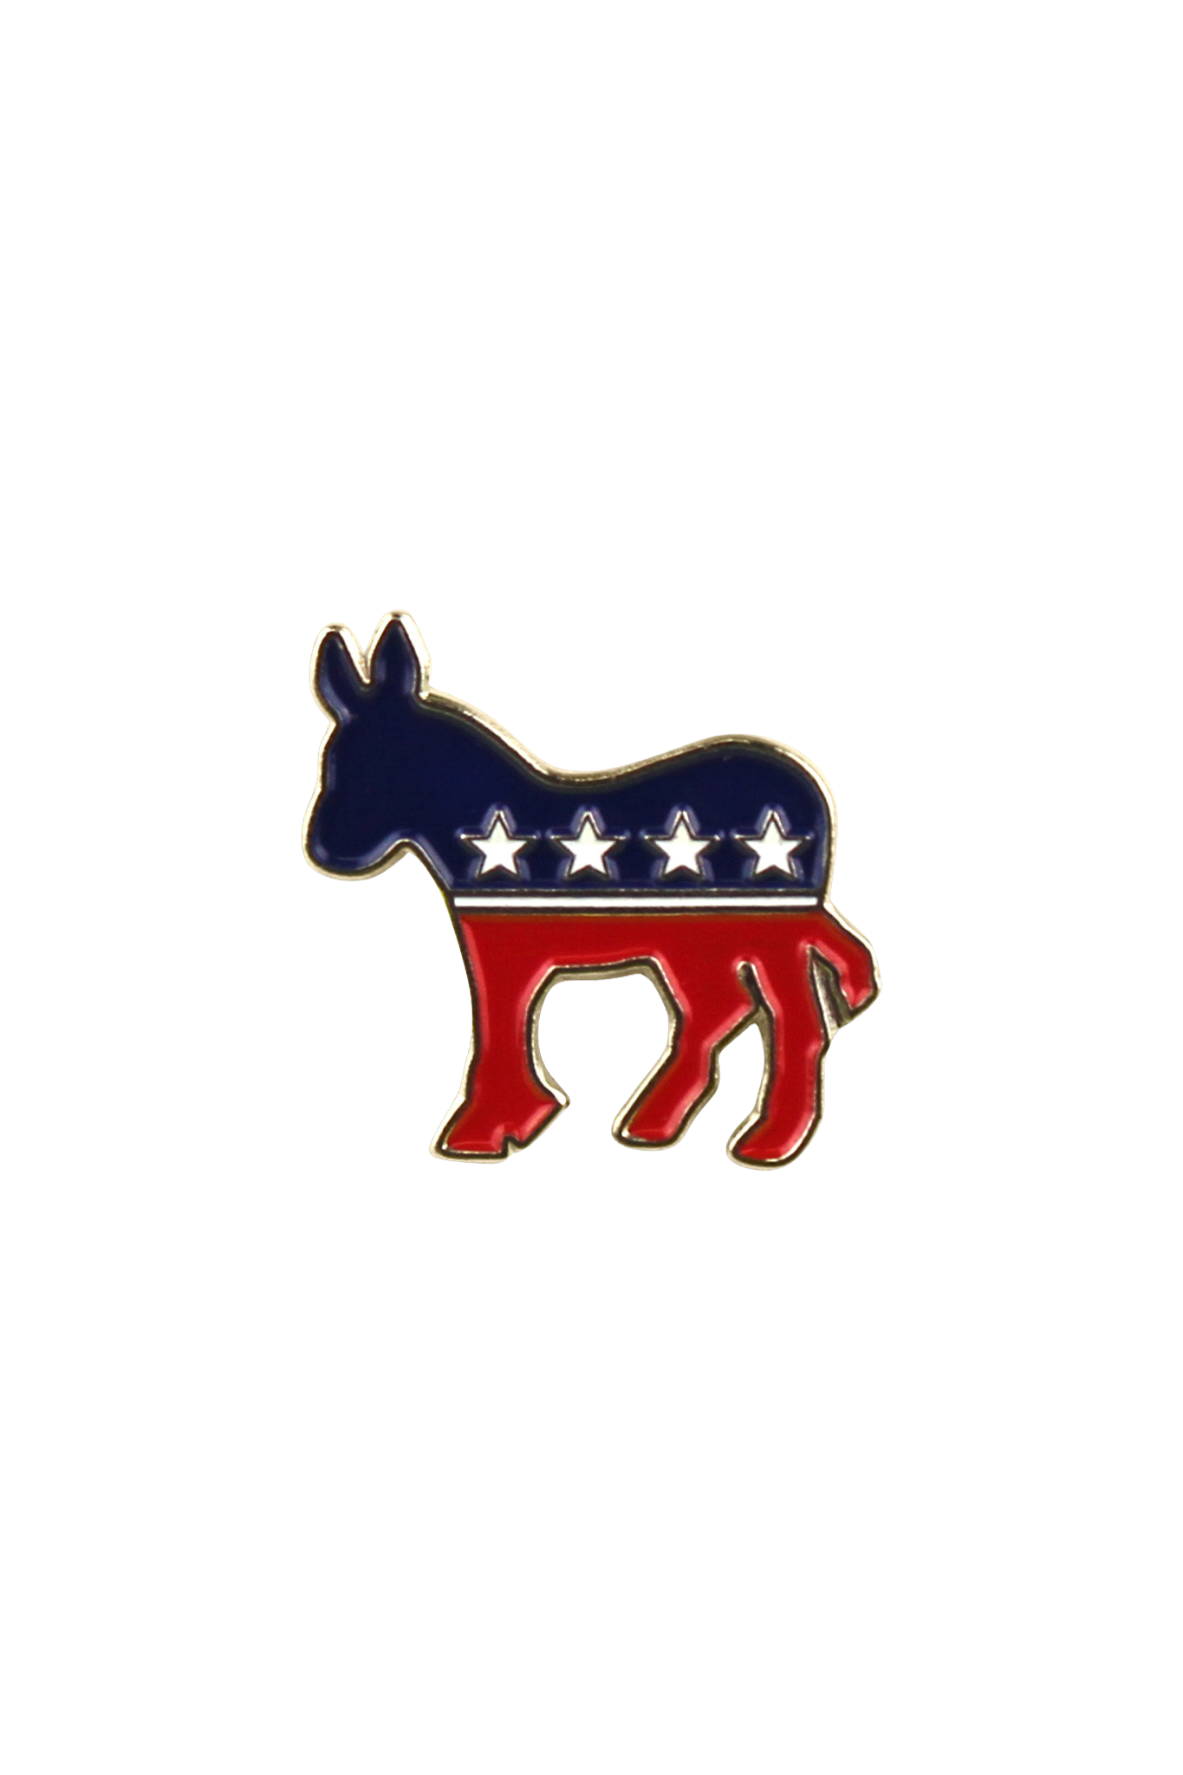 Proud Democrat Donkey